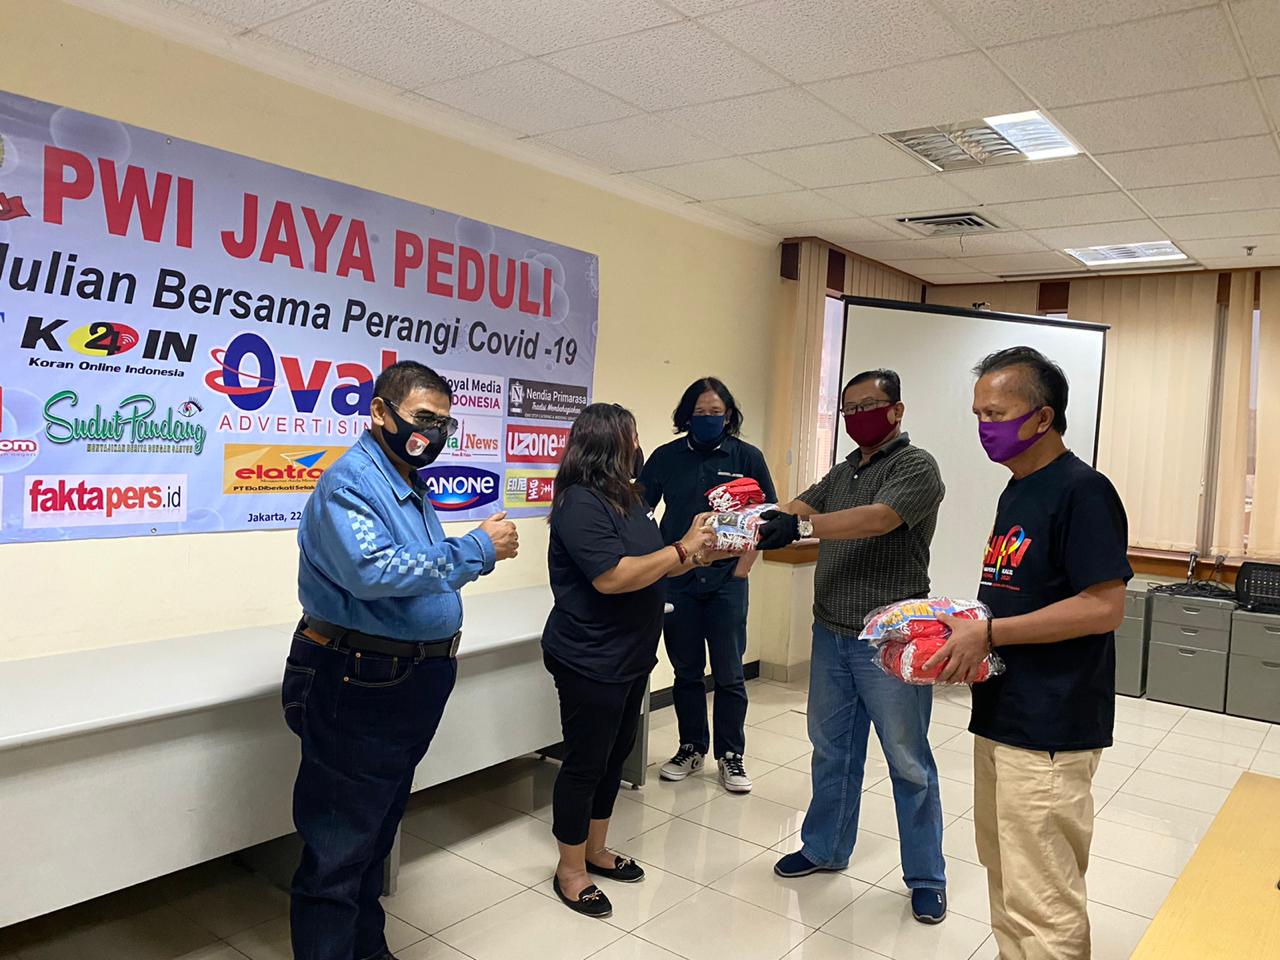  PWI Jaya Peduli Terima Masker Bantuan Catur Wangsa Indonesia